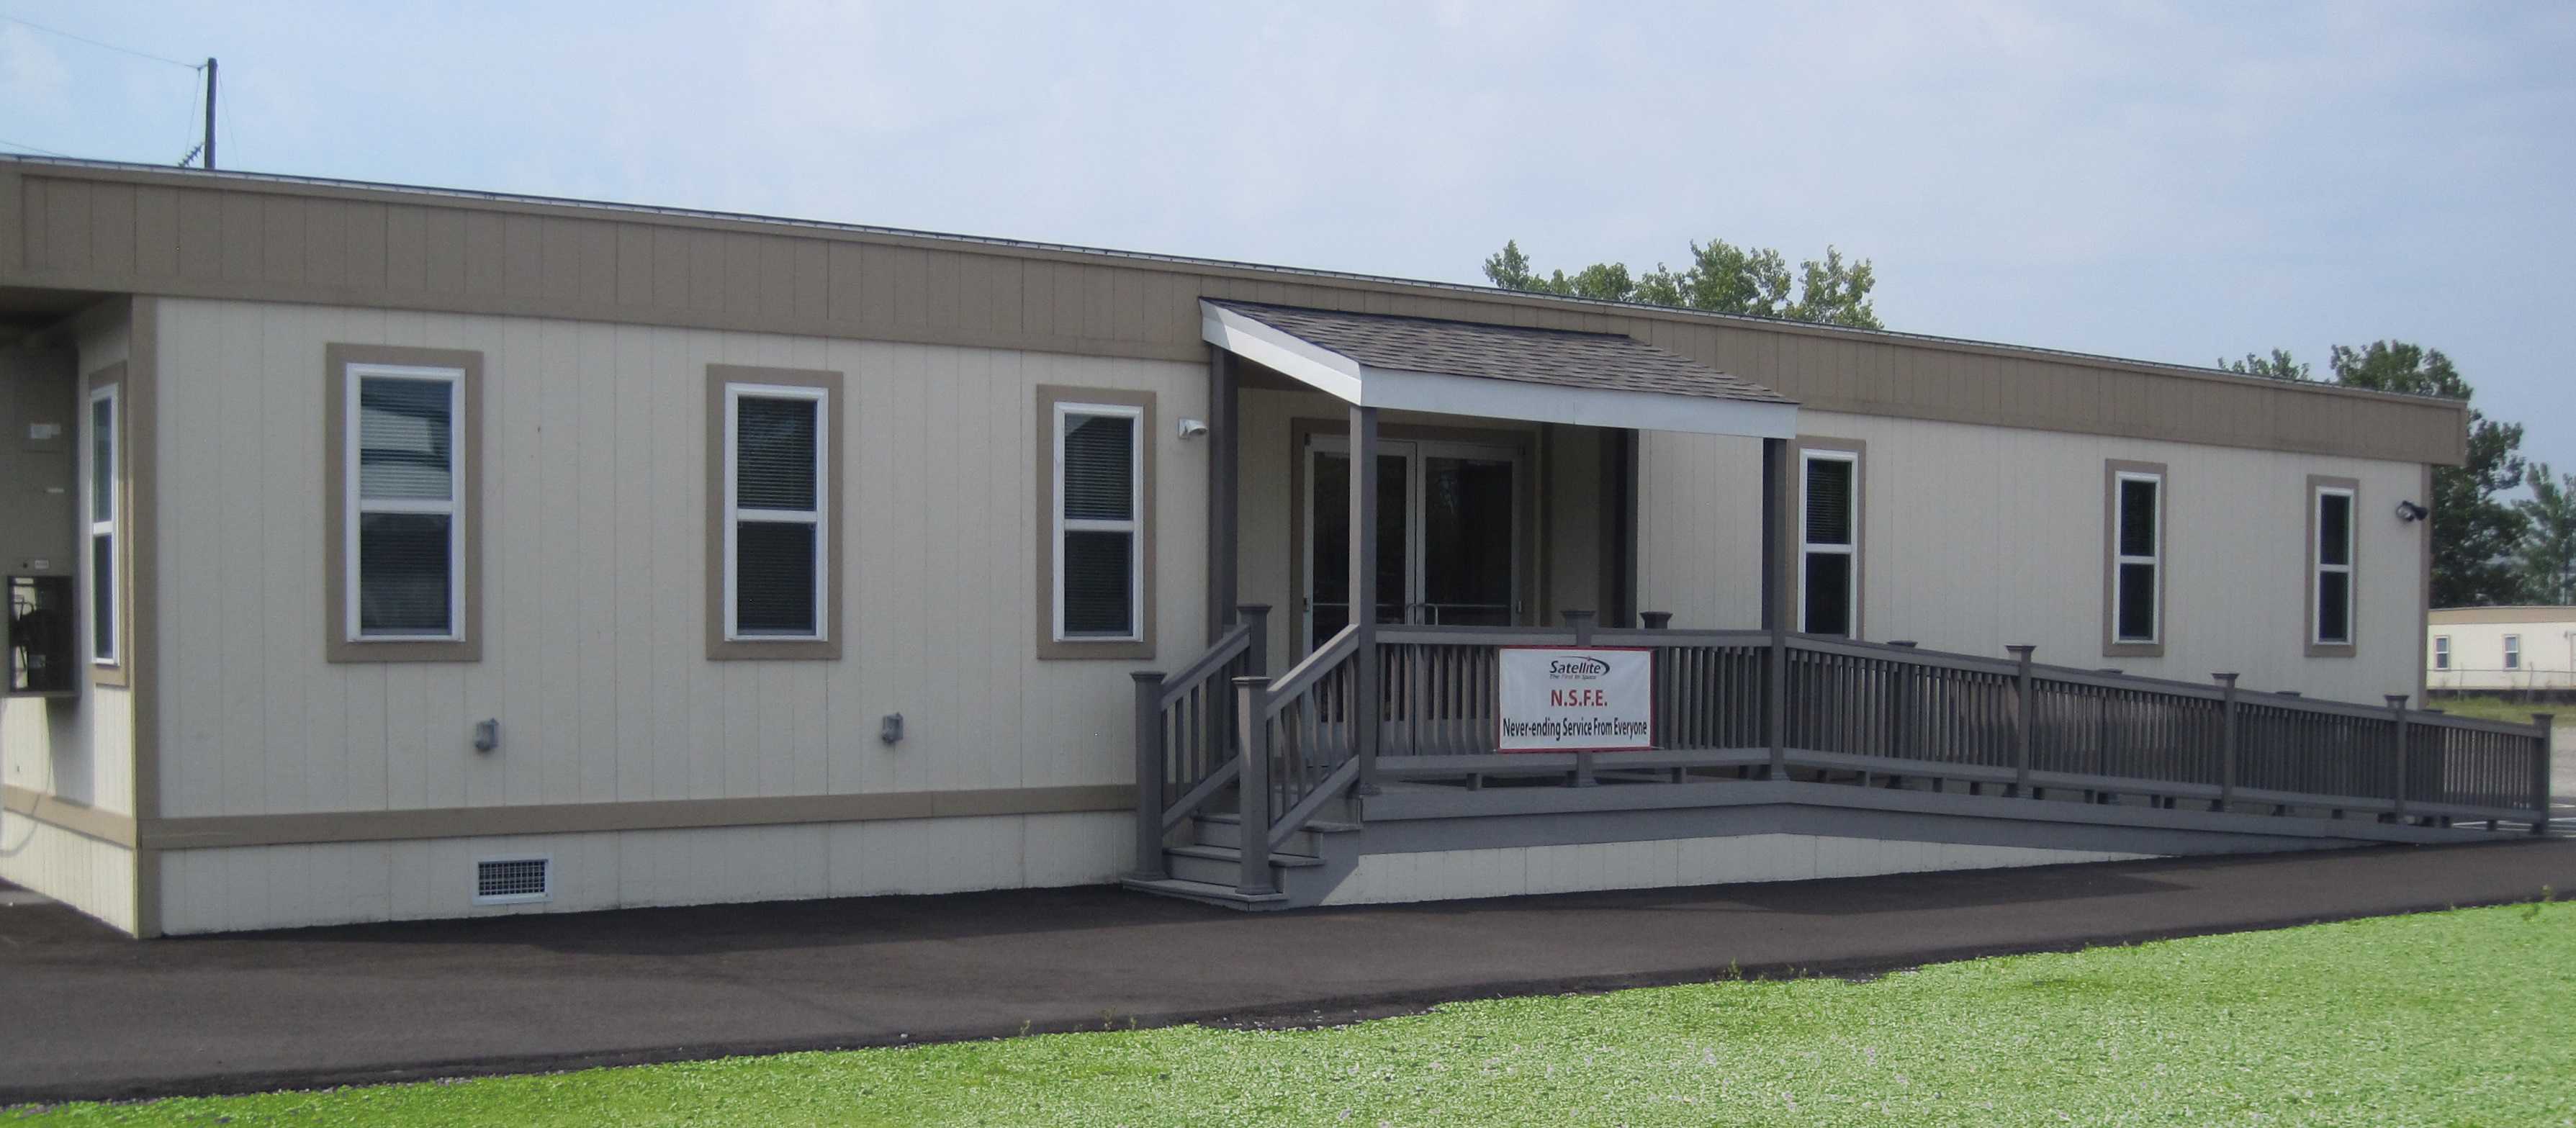 Satellite Shelters, Inc. Cincinnati Office